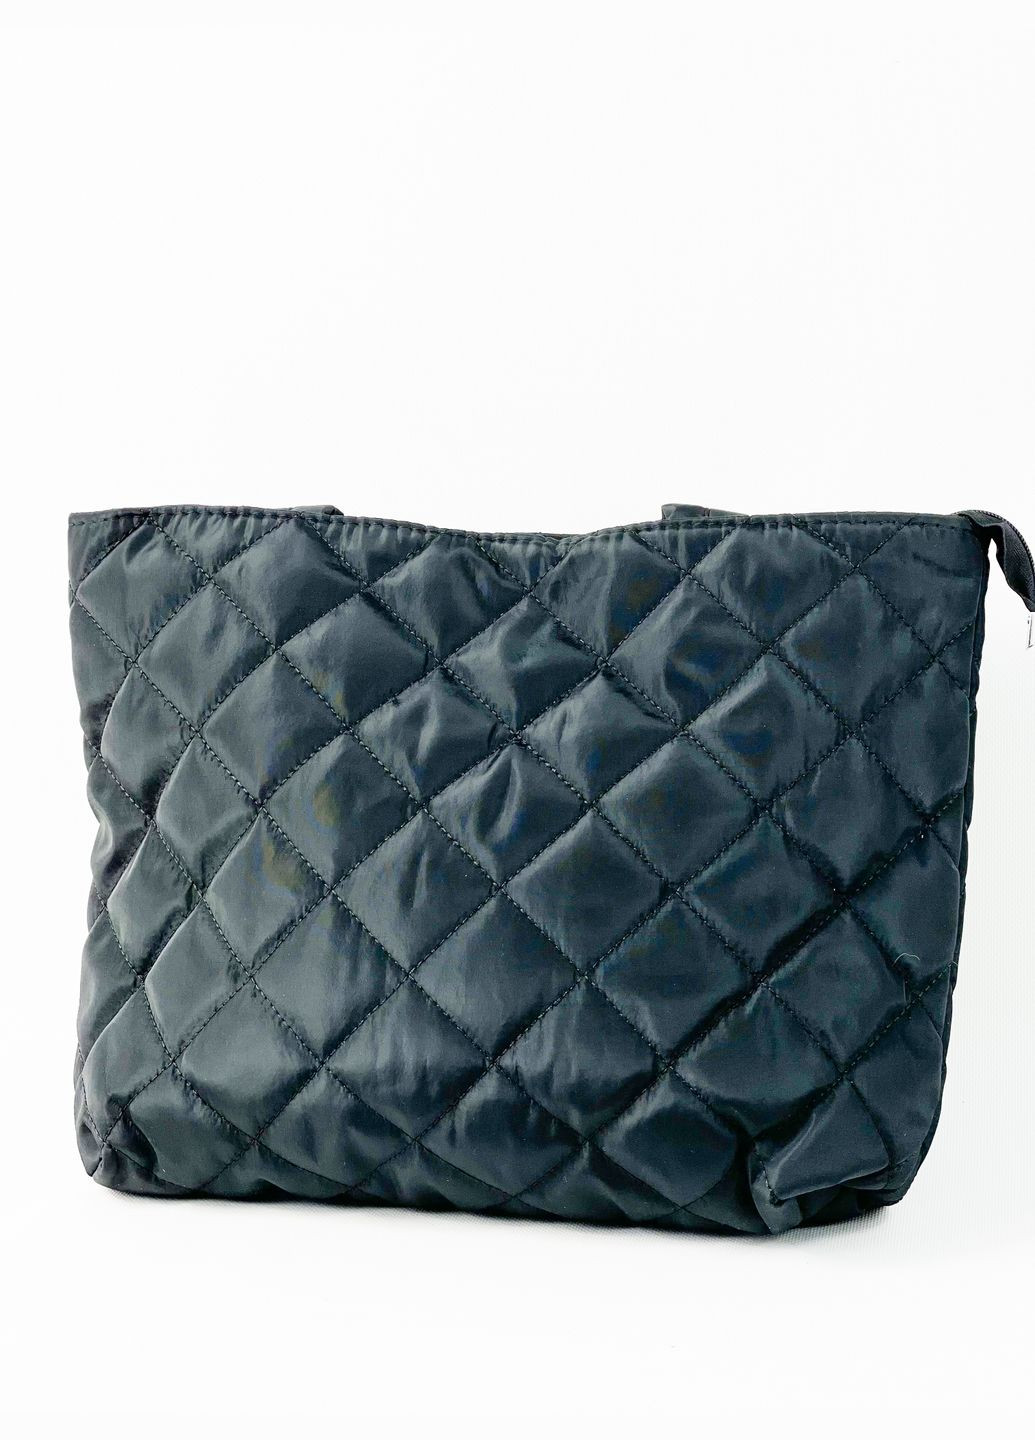 Сумка / Сумка женская шоппер/ Женская сумка текстильная / MAGICBAG (278056576)